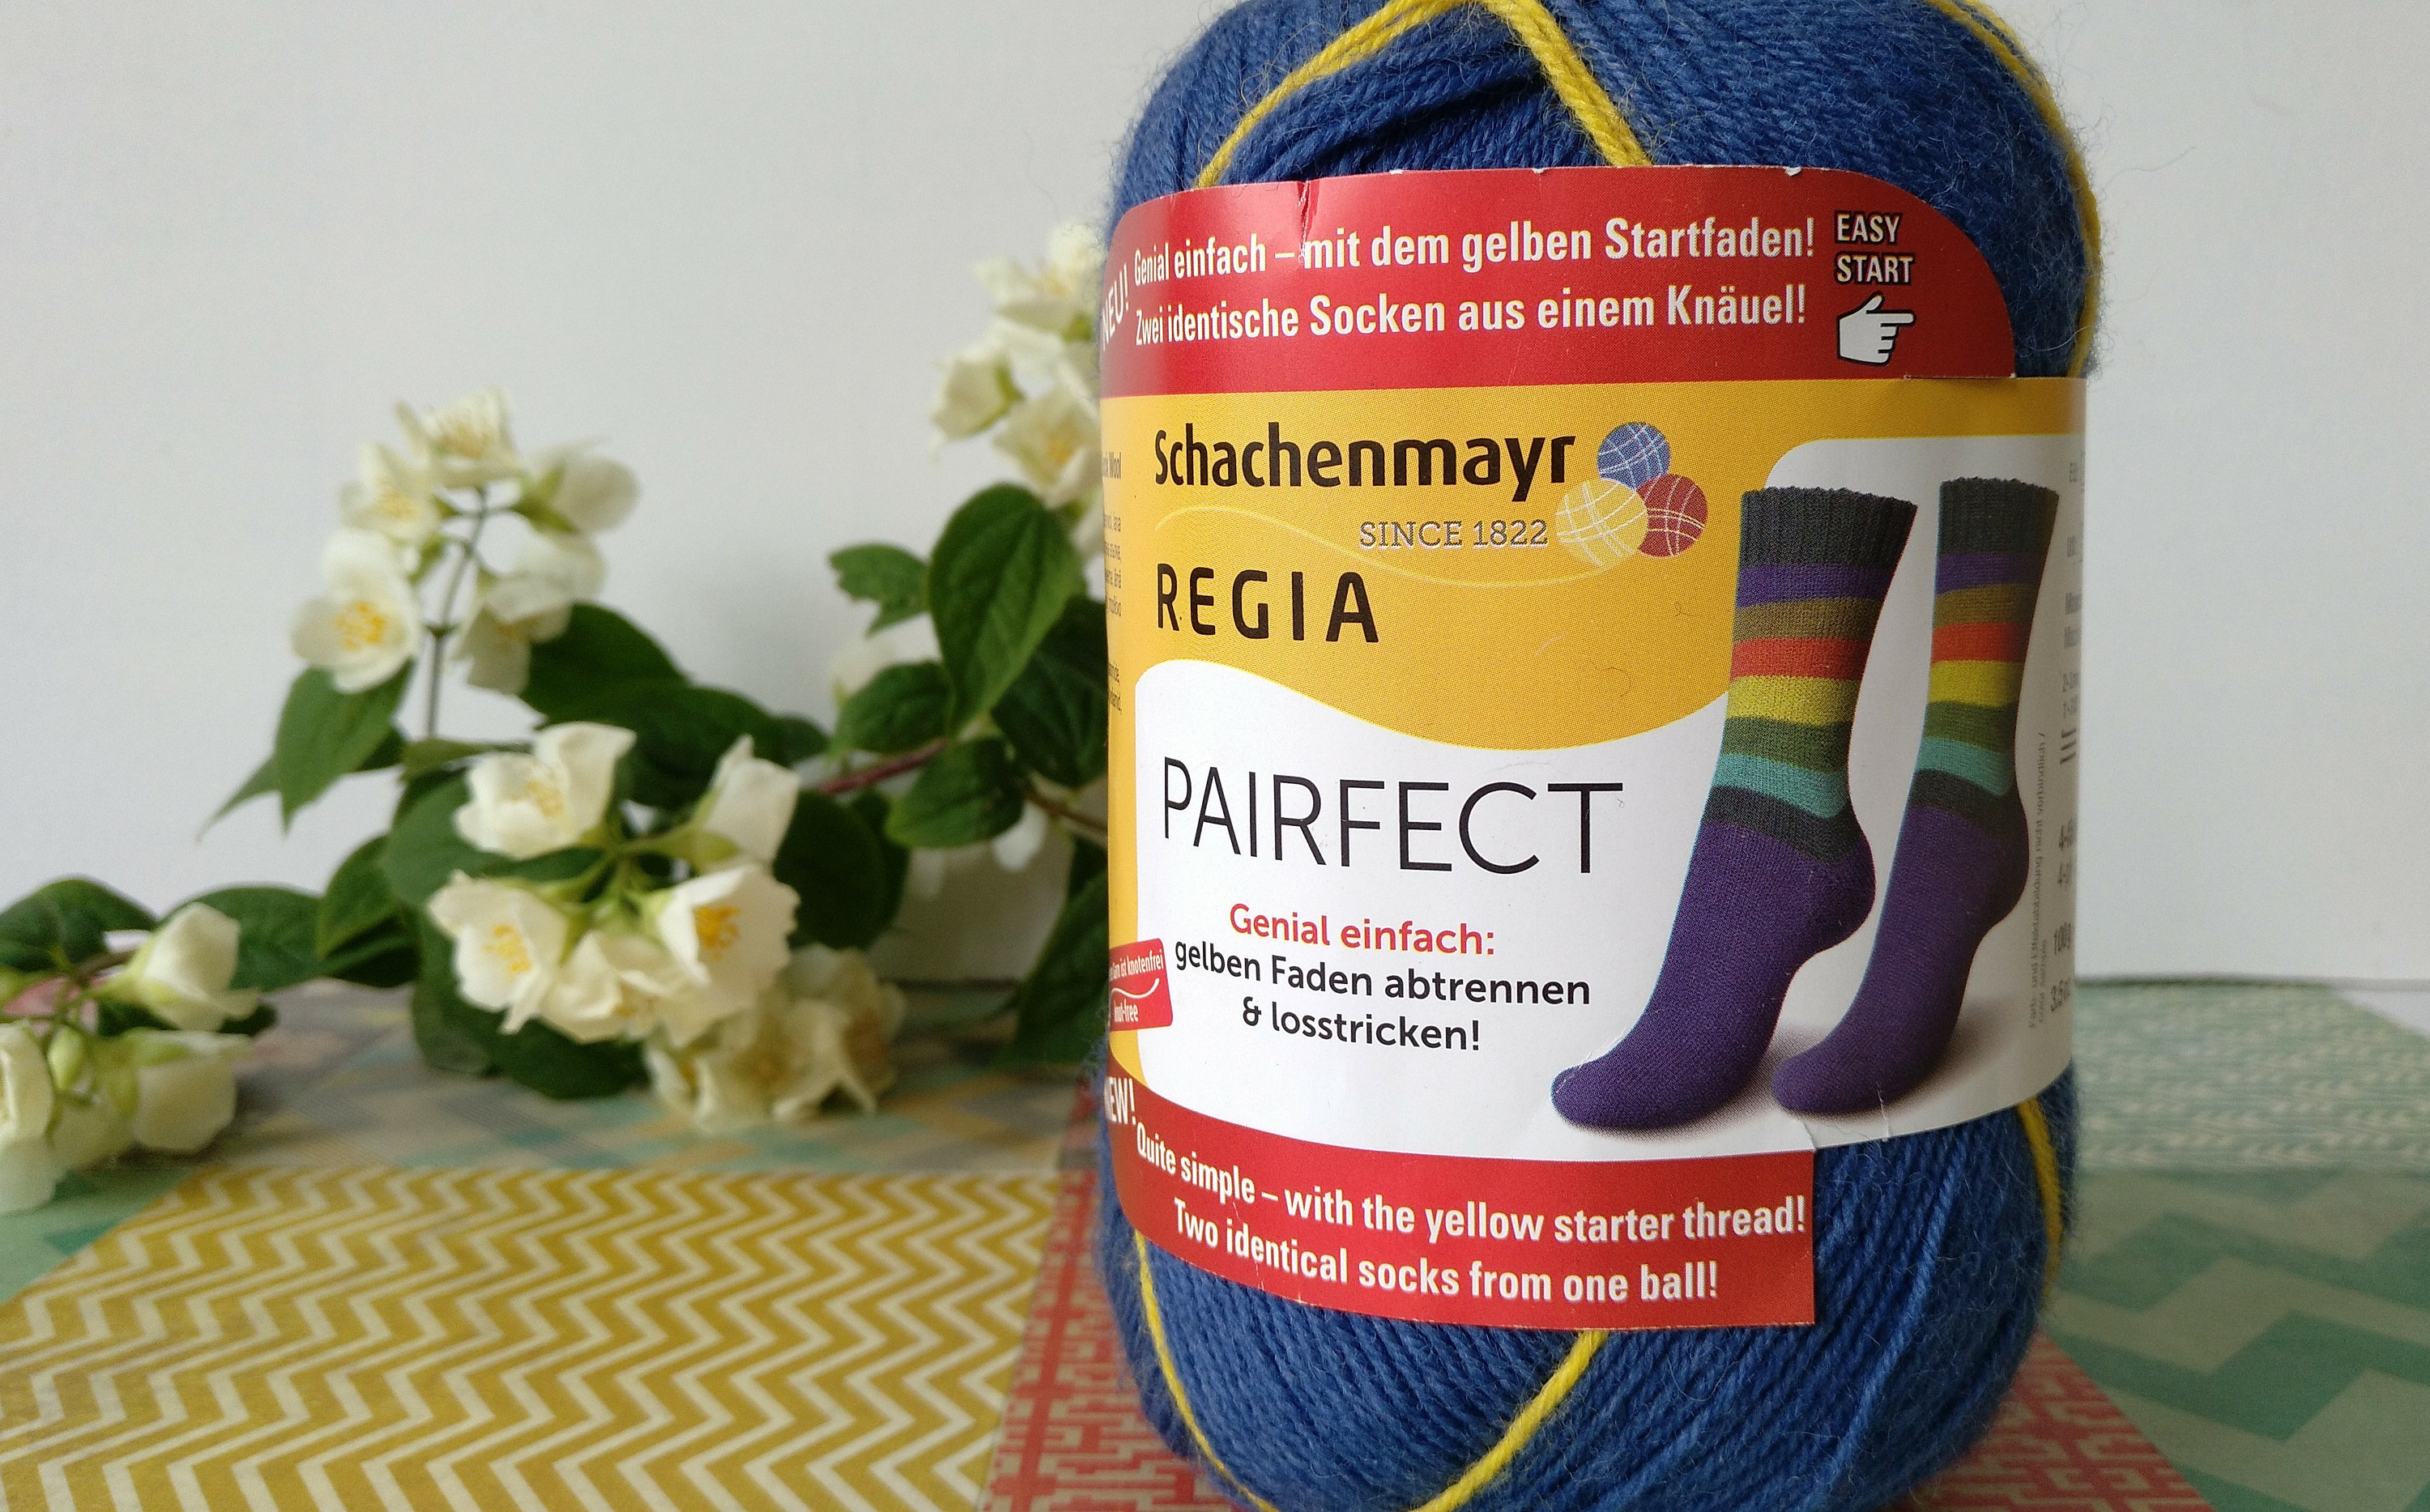 Gründl Hot Socks Pearl With Cashmere 4ply 1.75oz. / 50 G, High Quality  Superwash Sock Knitting Yarn 